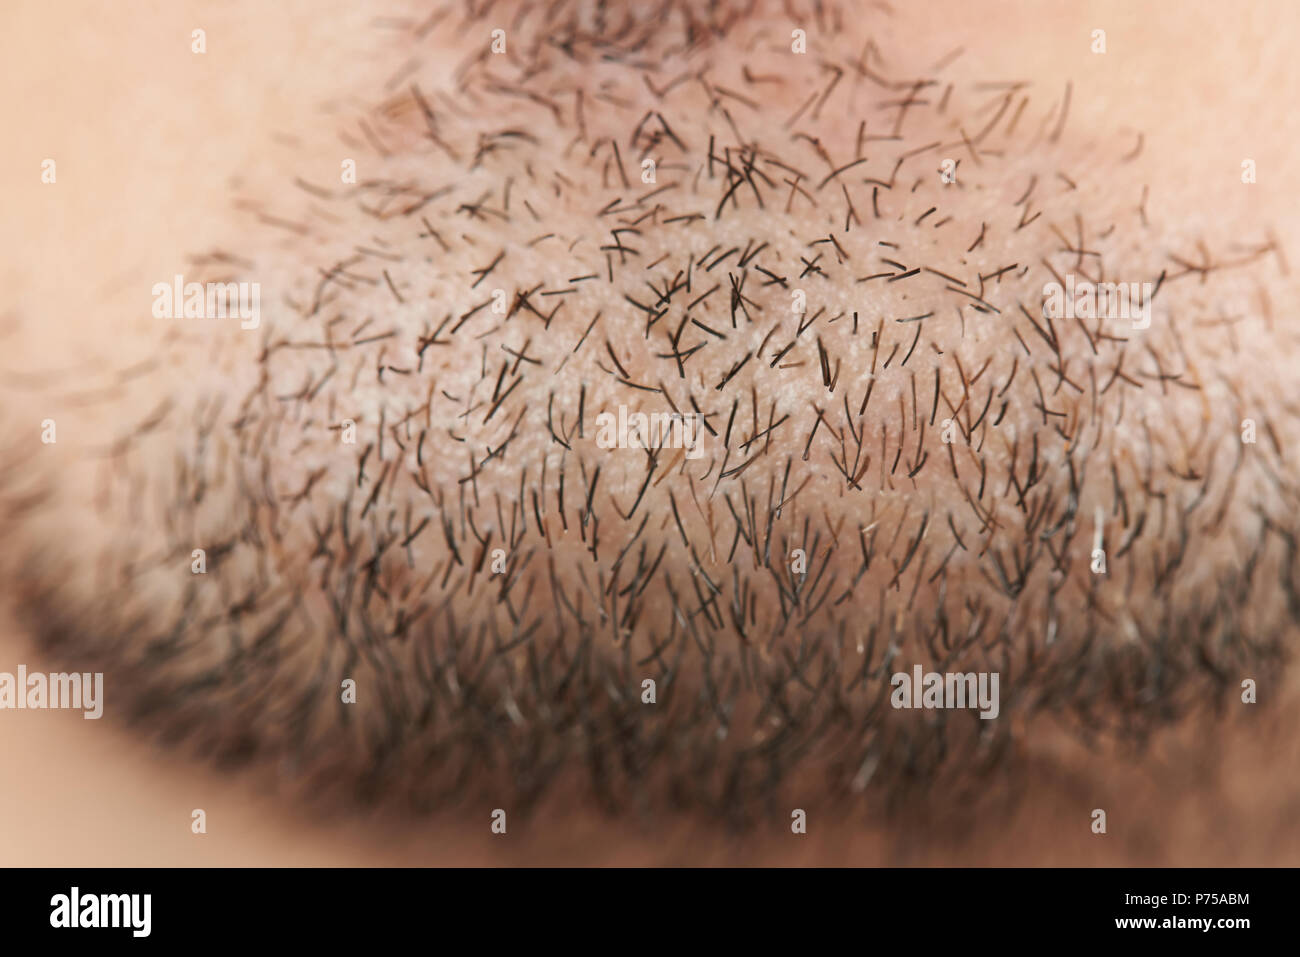 Schwarzes Haar des Menschen Bart am Kinn Nähe zu sehen. Stockfoto